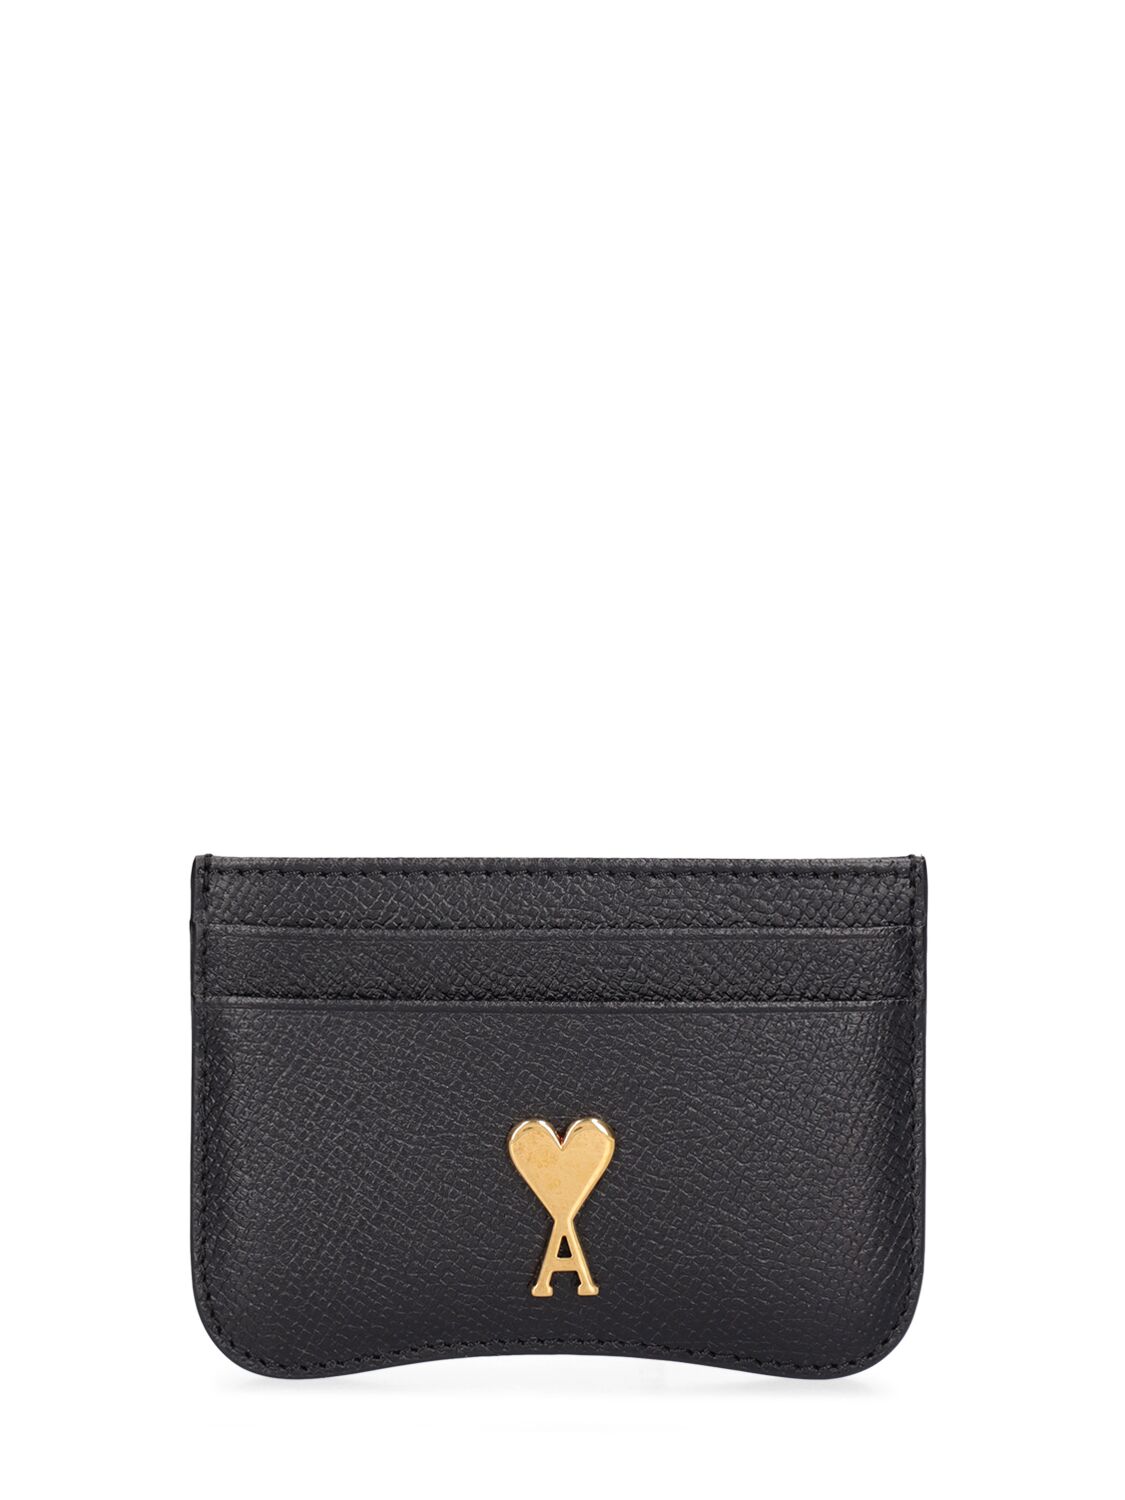 Ami Alexandre Mattiussi Paris Paris Grained Leather Card Holder In Black,brass